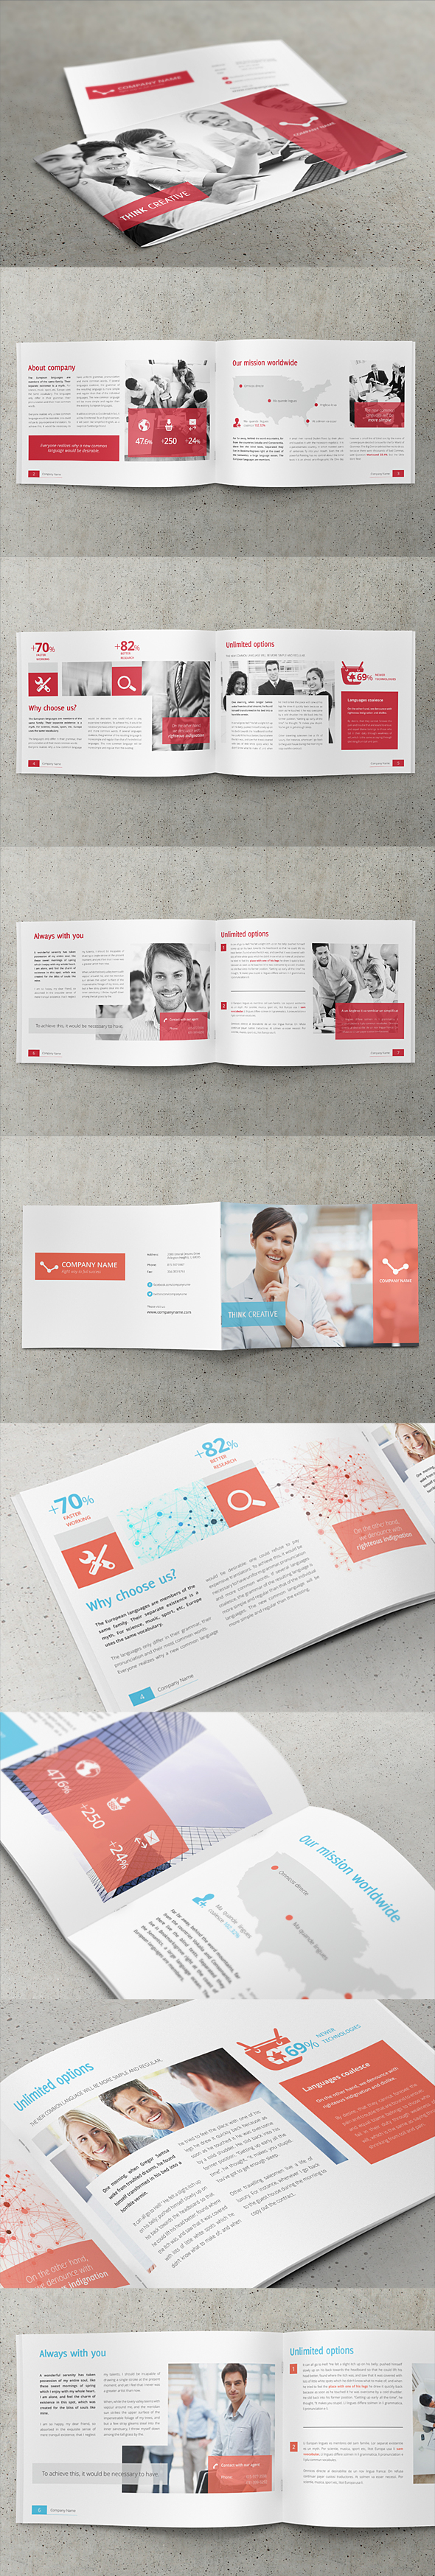 minimal brochure business corporate design print Layout template brand Booklet professional Catalogue Album creative modern